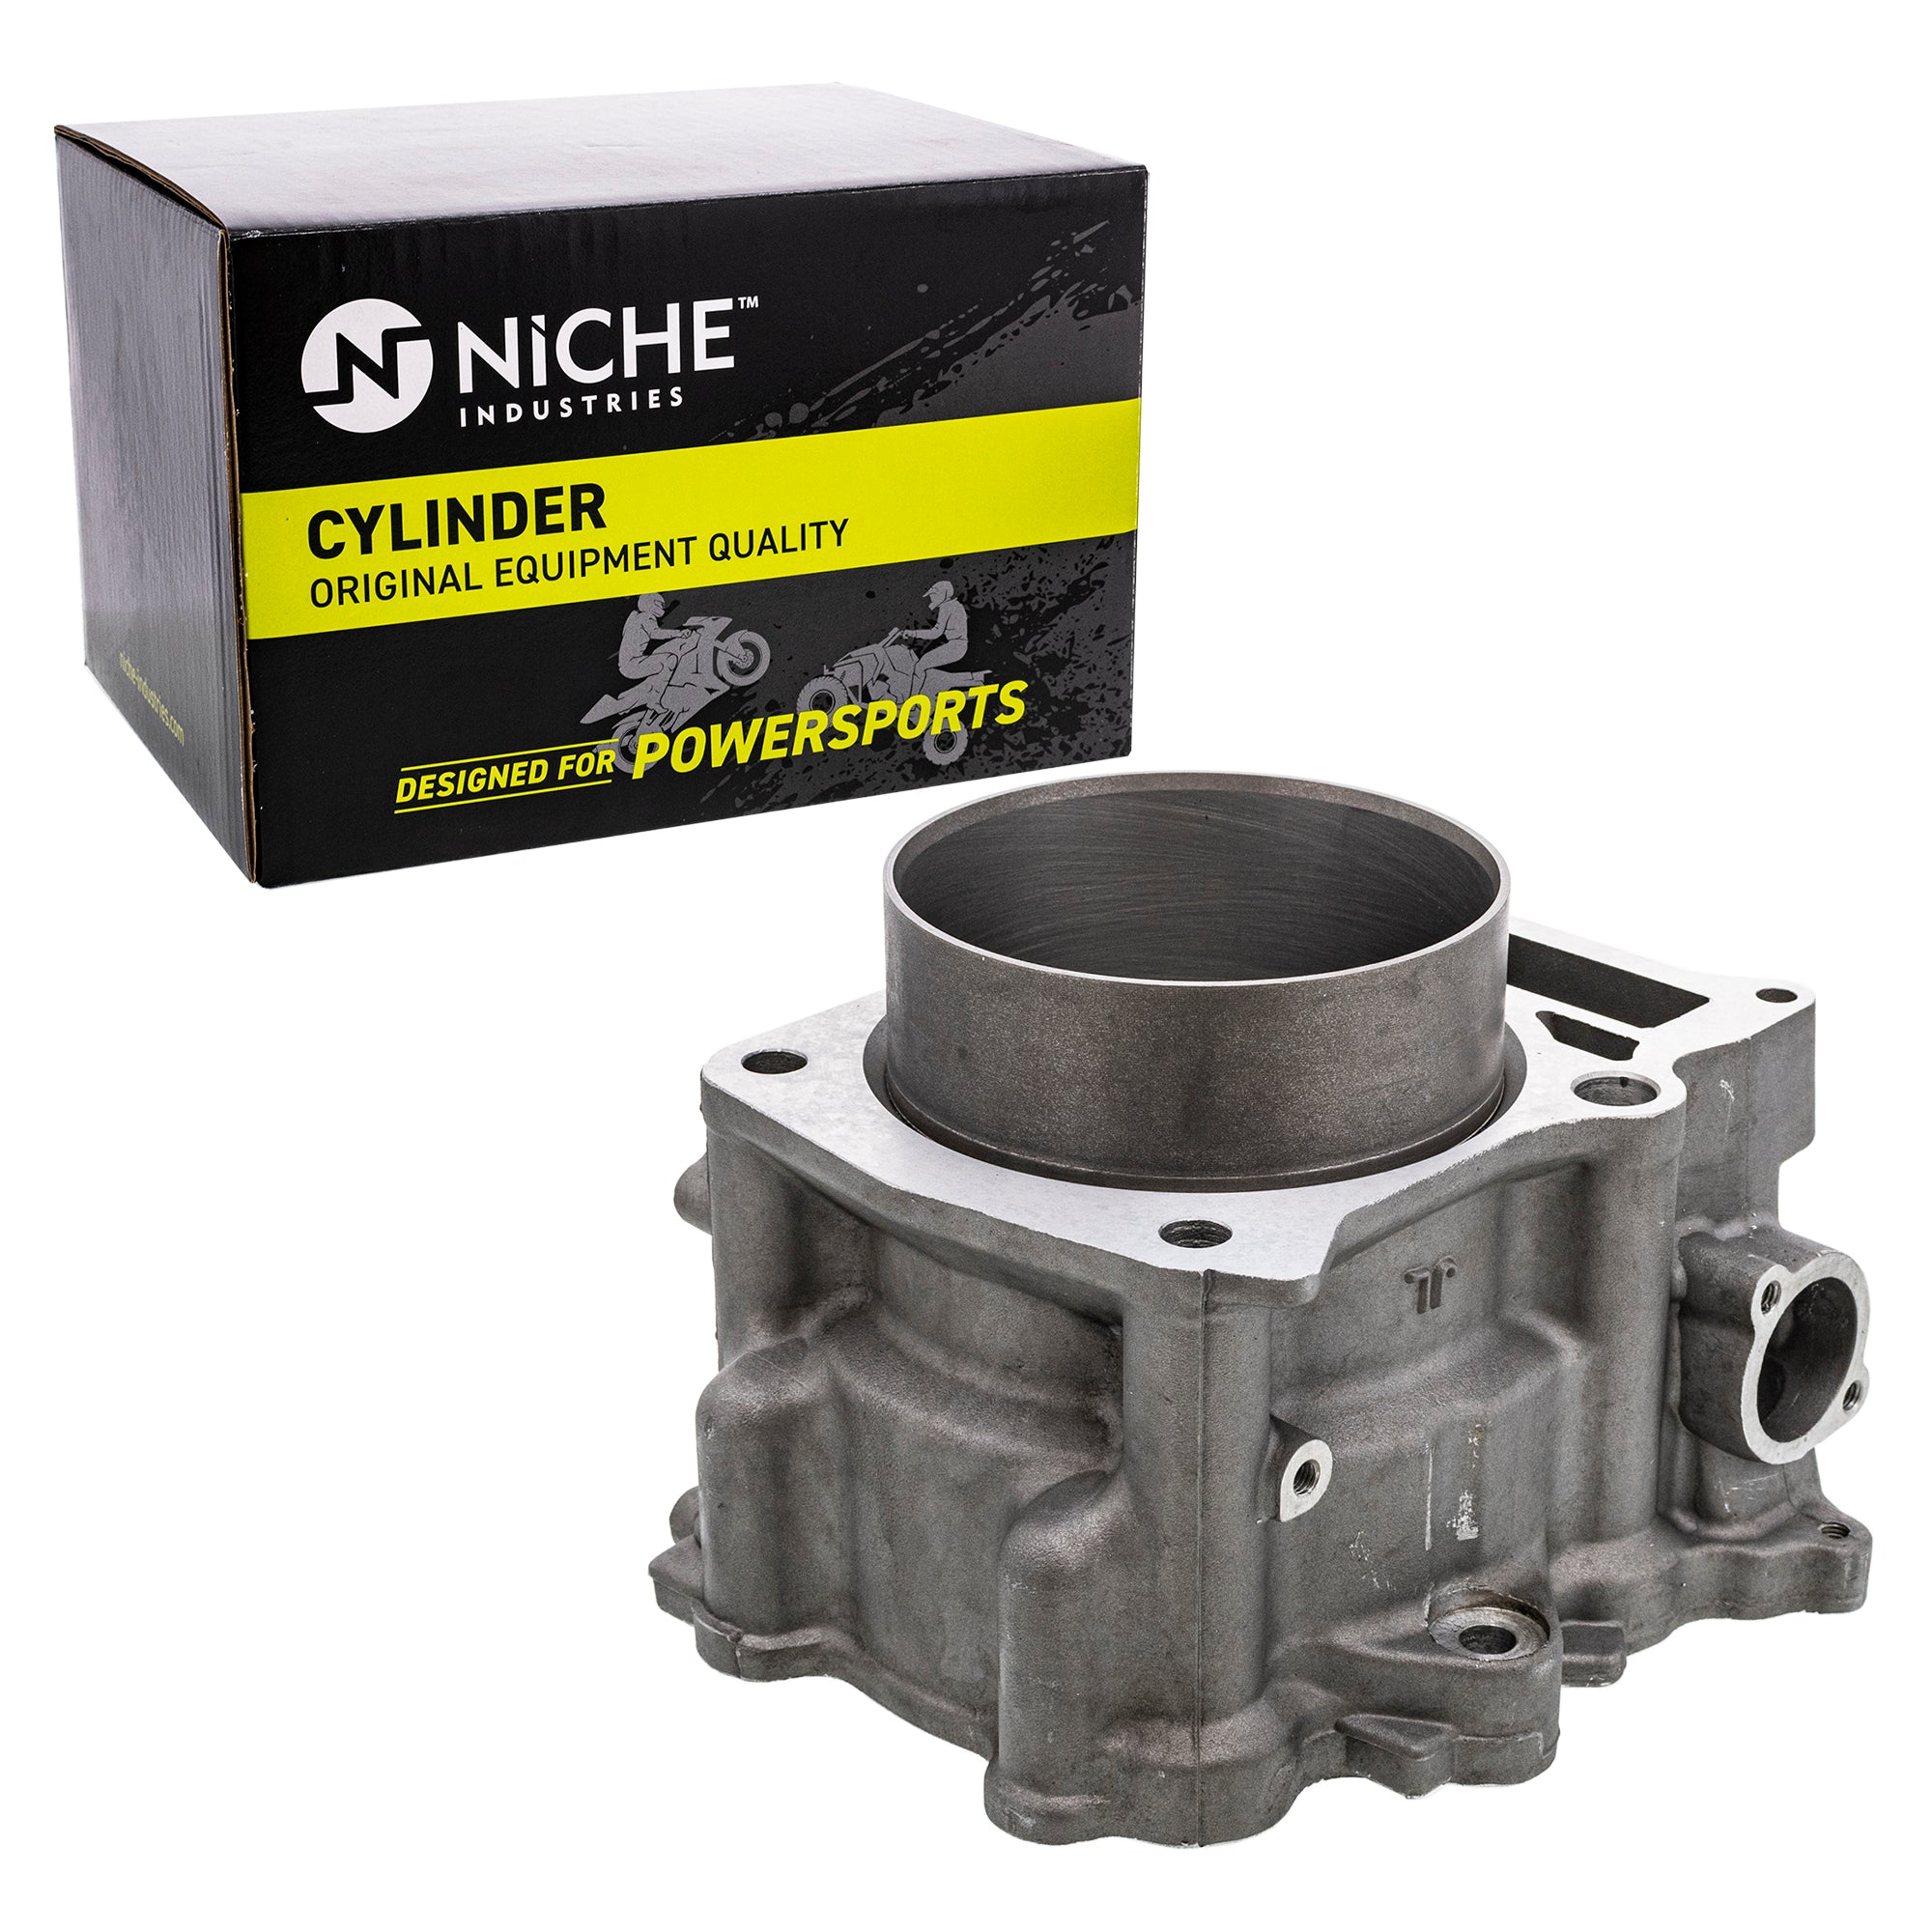 NICHE MK1012499 Cylinder Kit for Rhino Raptor Grizzly